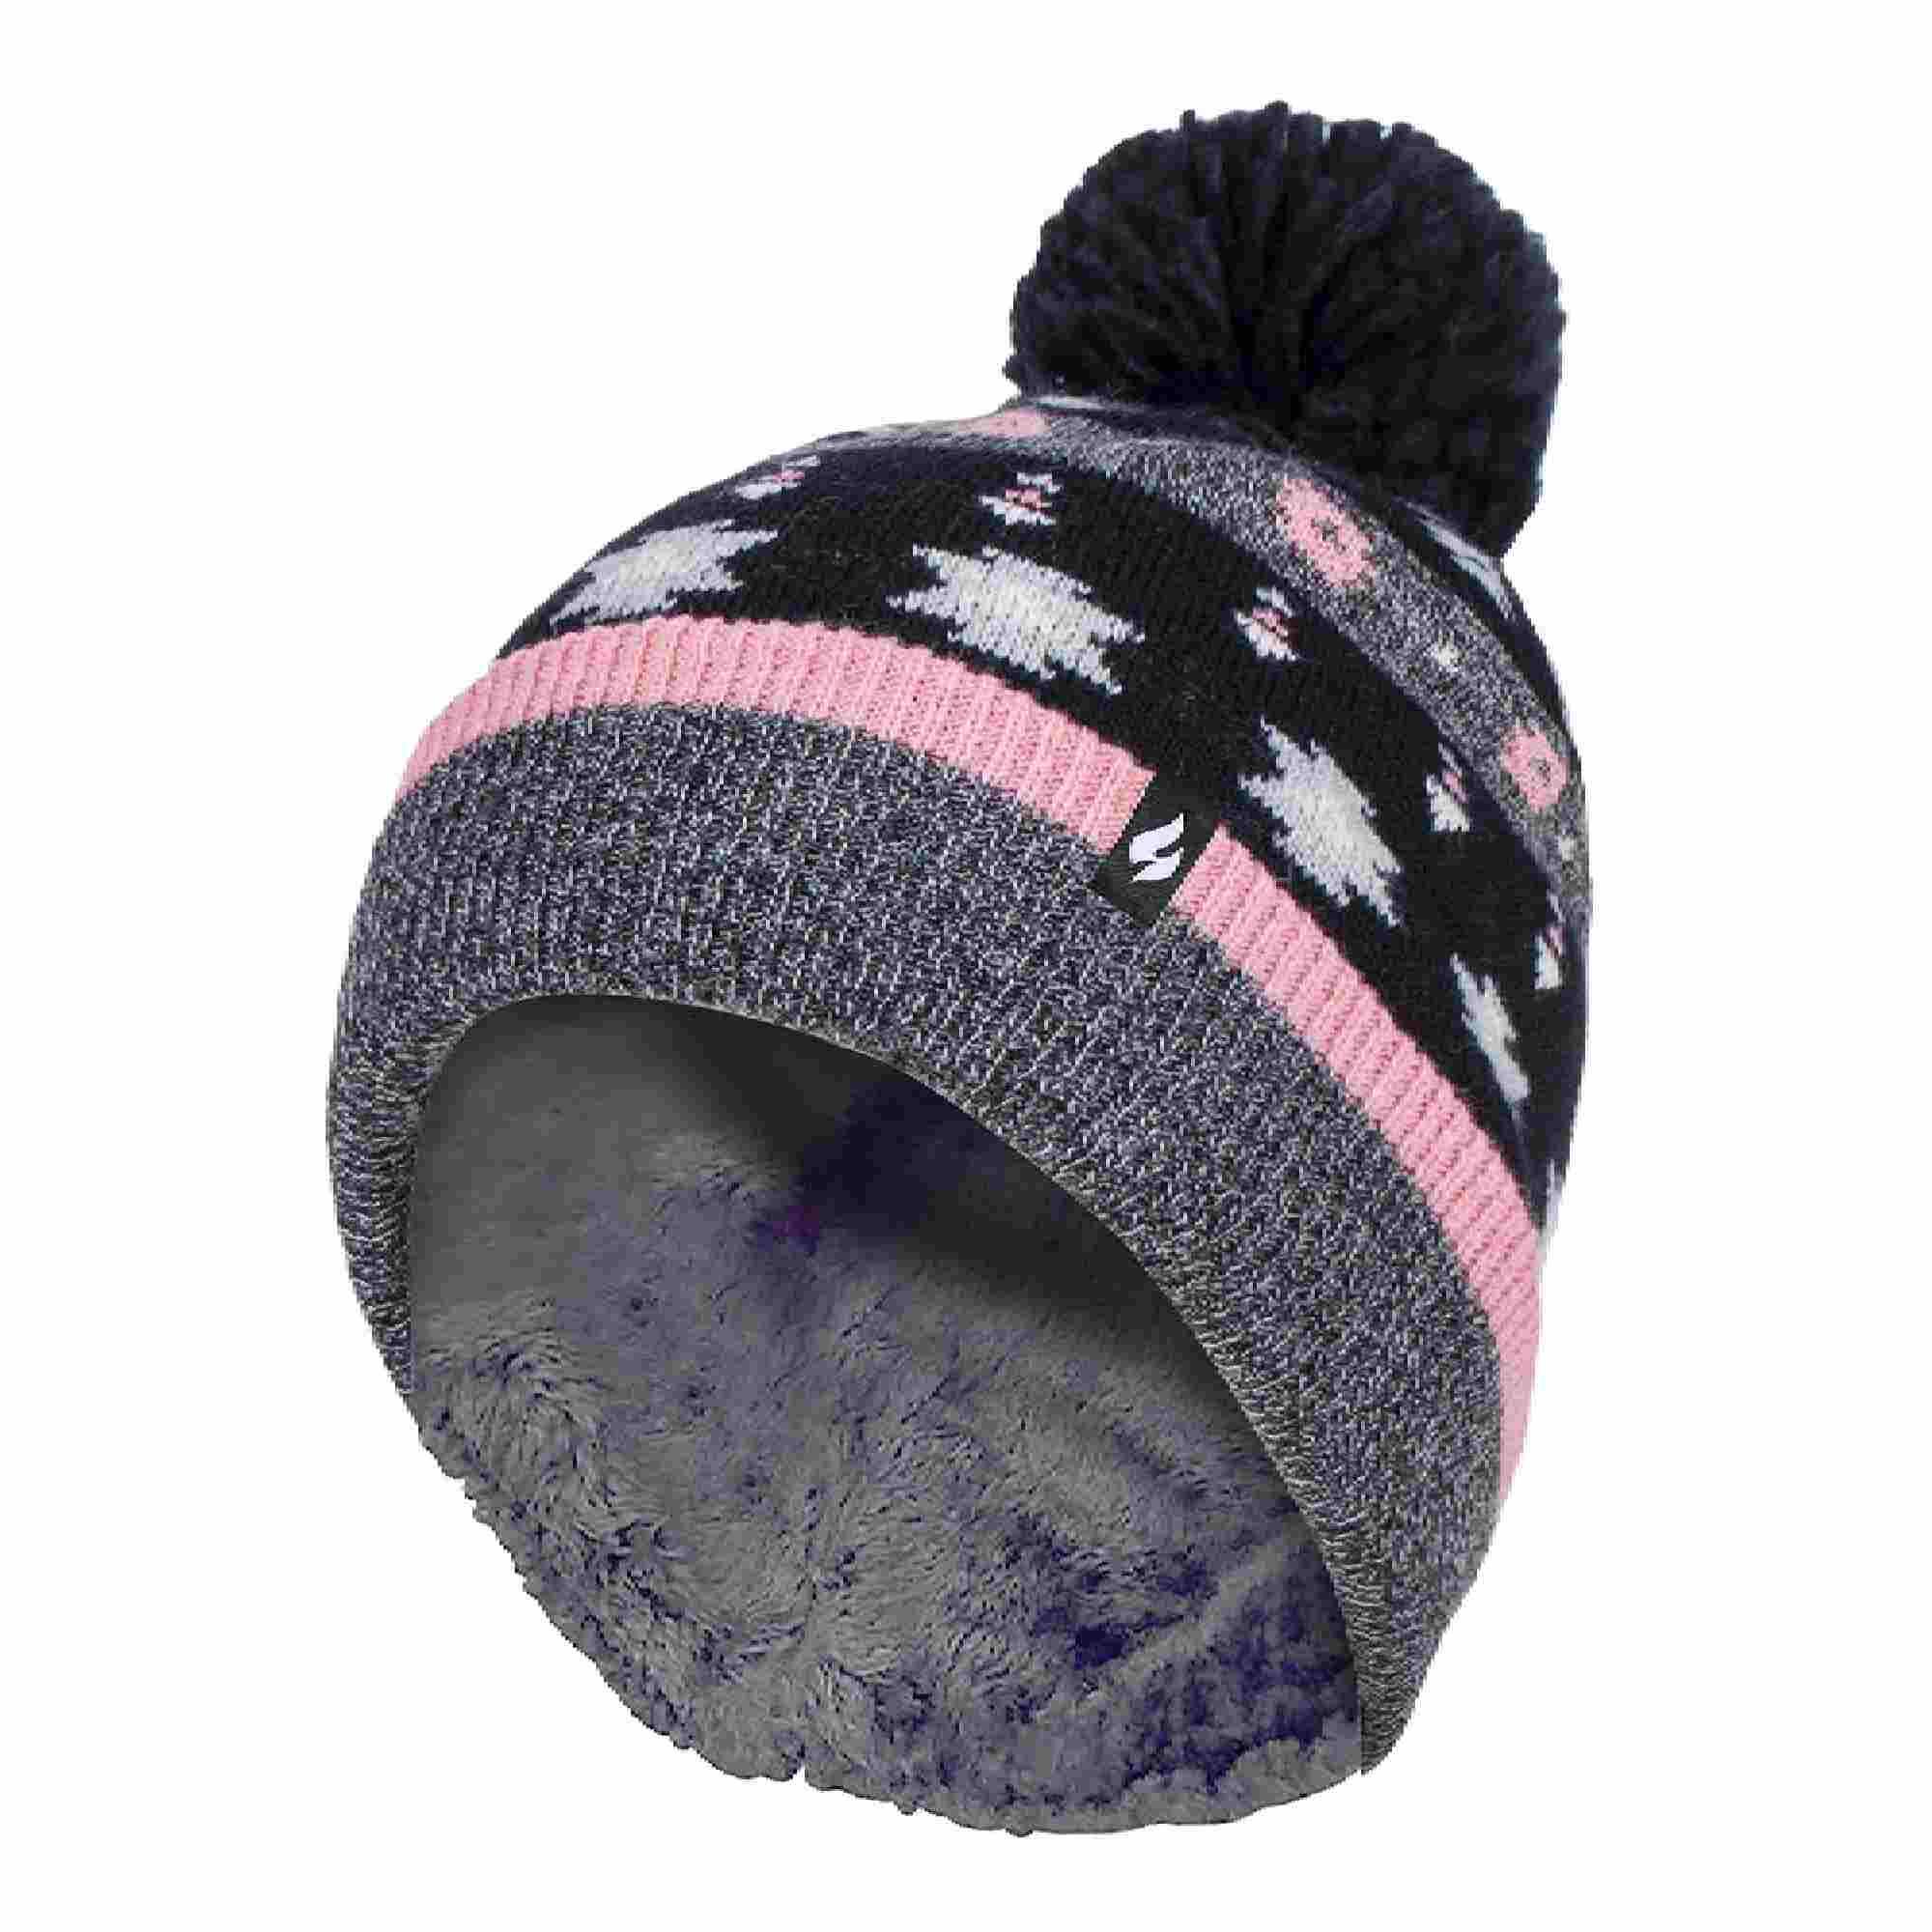 HEAT HOLDERS Ladies Warm Knit Fleece Lined Winter Warm Hat with Pom Pom